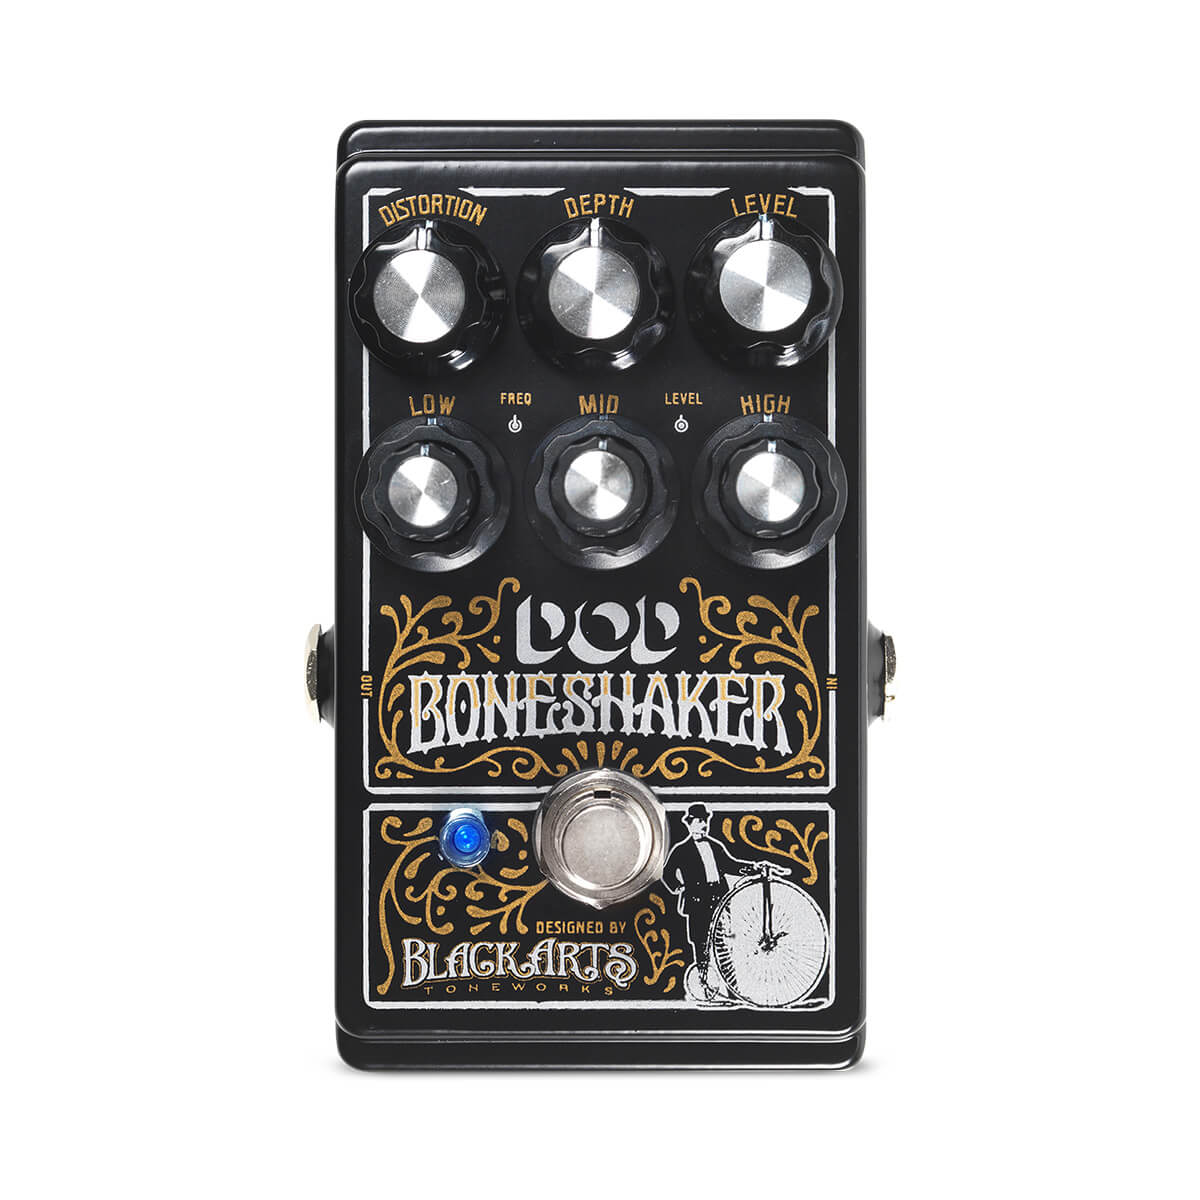 DOD Boneshaker distortion pedal with 3 band semi-parametric EQ. Top